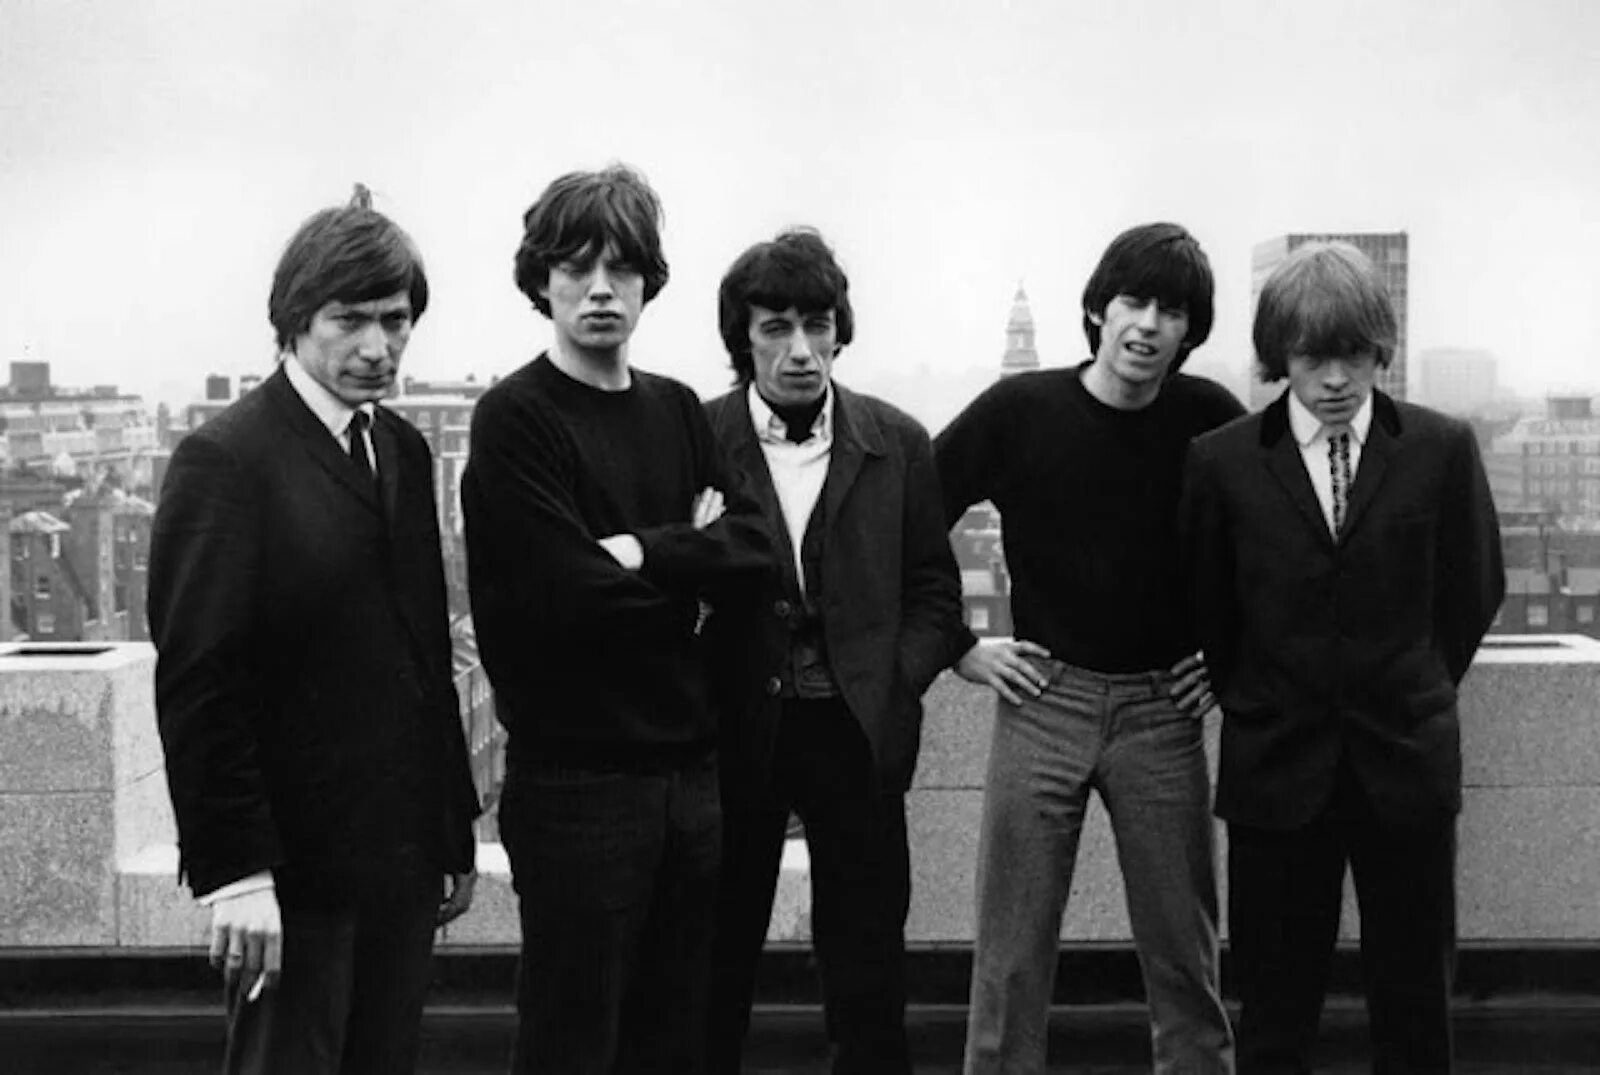 Группы 60 80. The Rolling Stones в молодости. Группа the Rolling Stones молодые. Роллинг стоунз 60-е. Роллинг стоунз 1968.